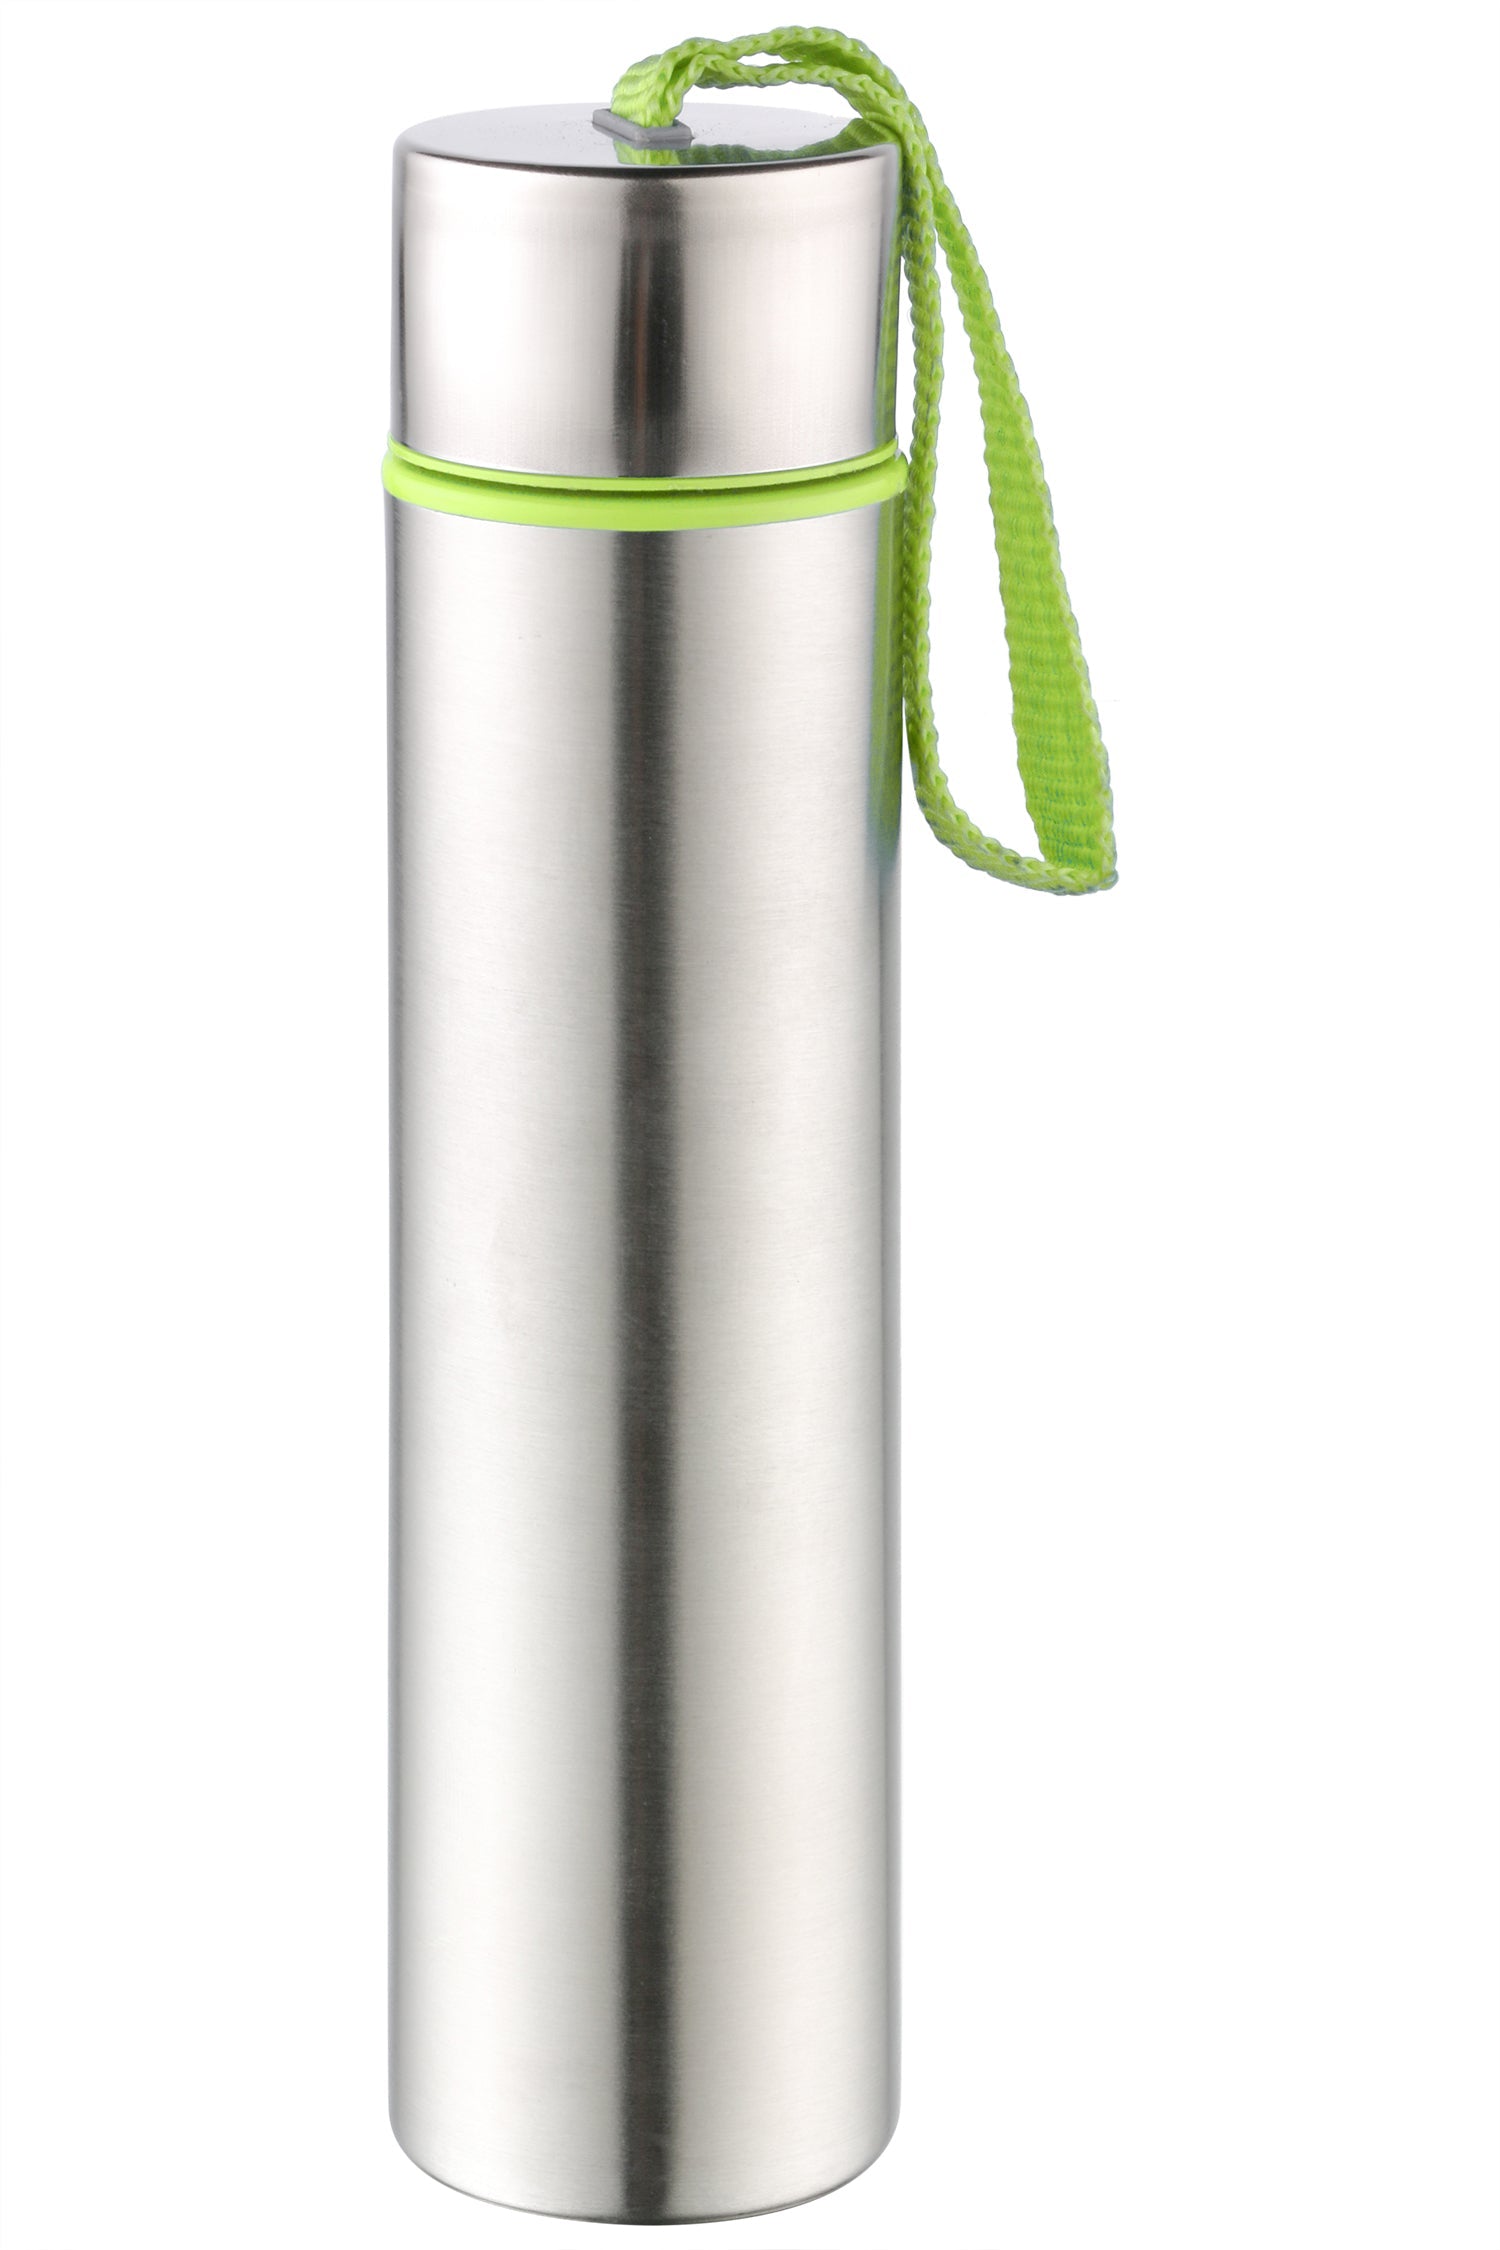 NanoNine Slim Single 300 ml Green Wall Stainless Steel Fridge Water Bottle